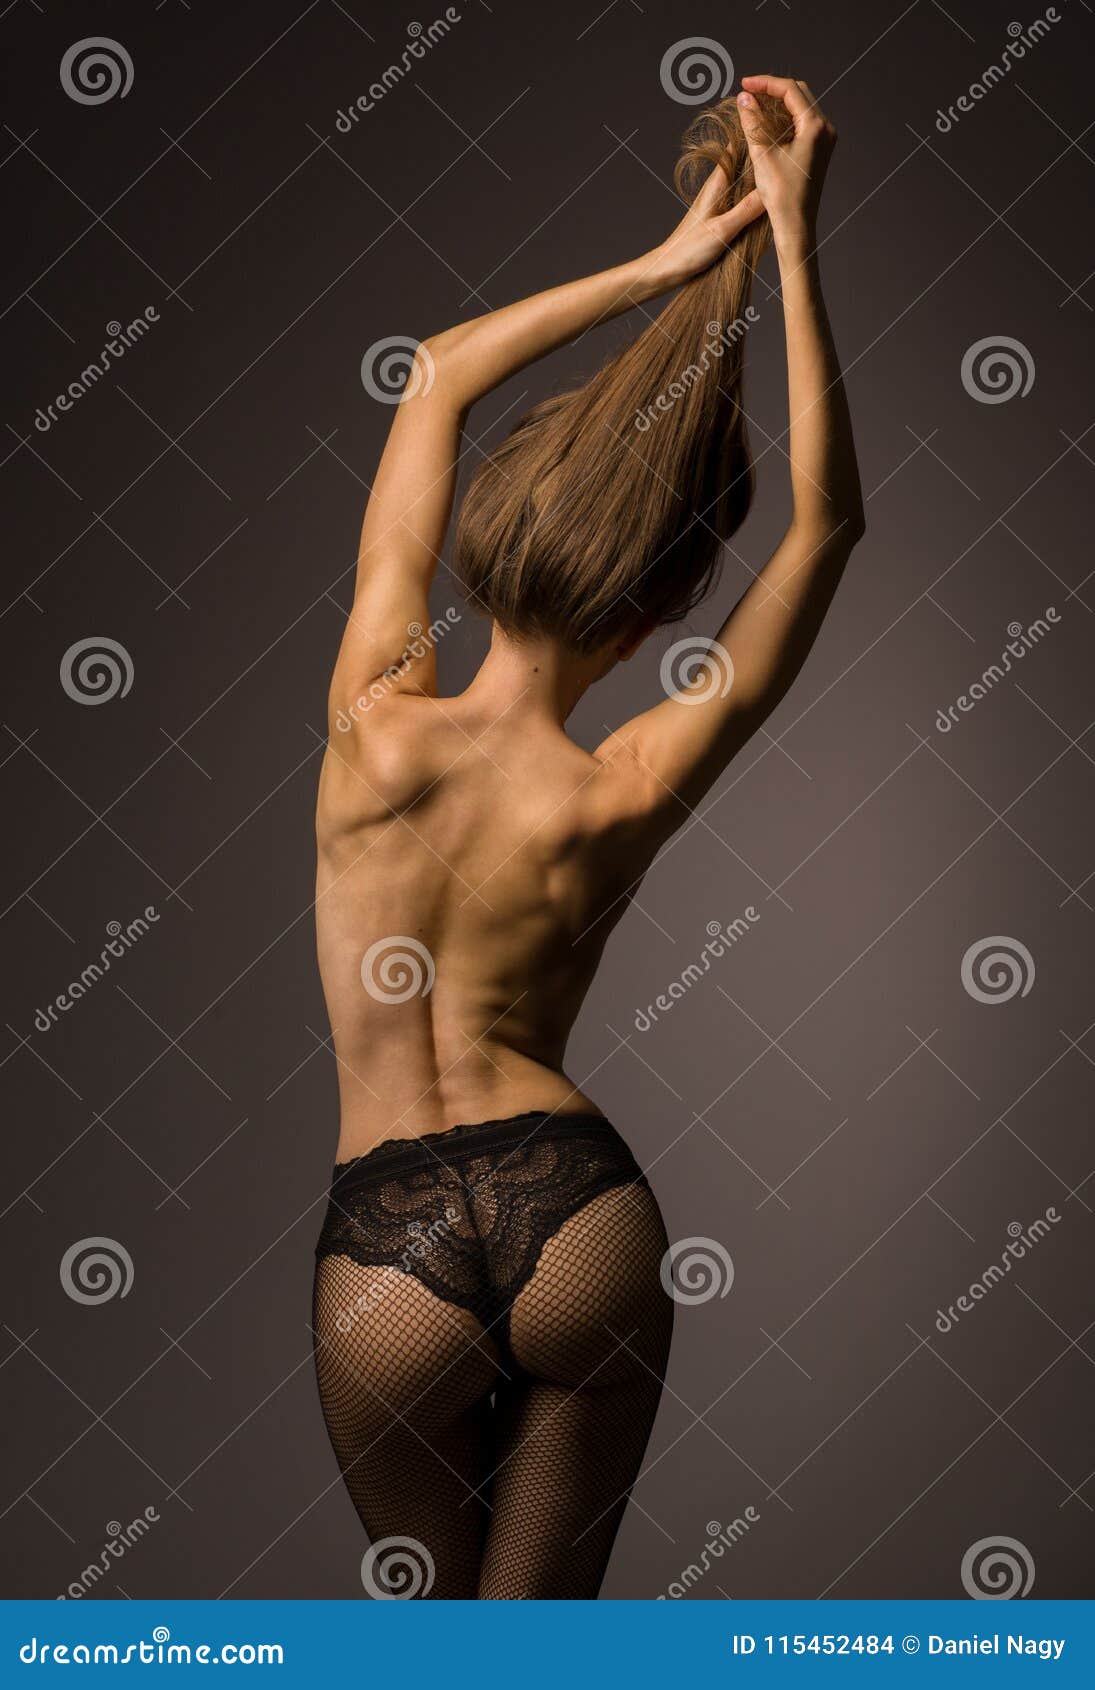 Girl. Stock Image. Image Of Blonde, Seduce, Pants, Caucasian